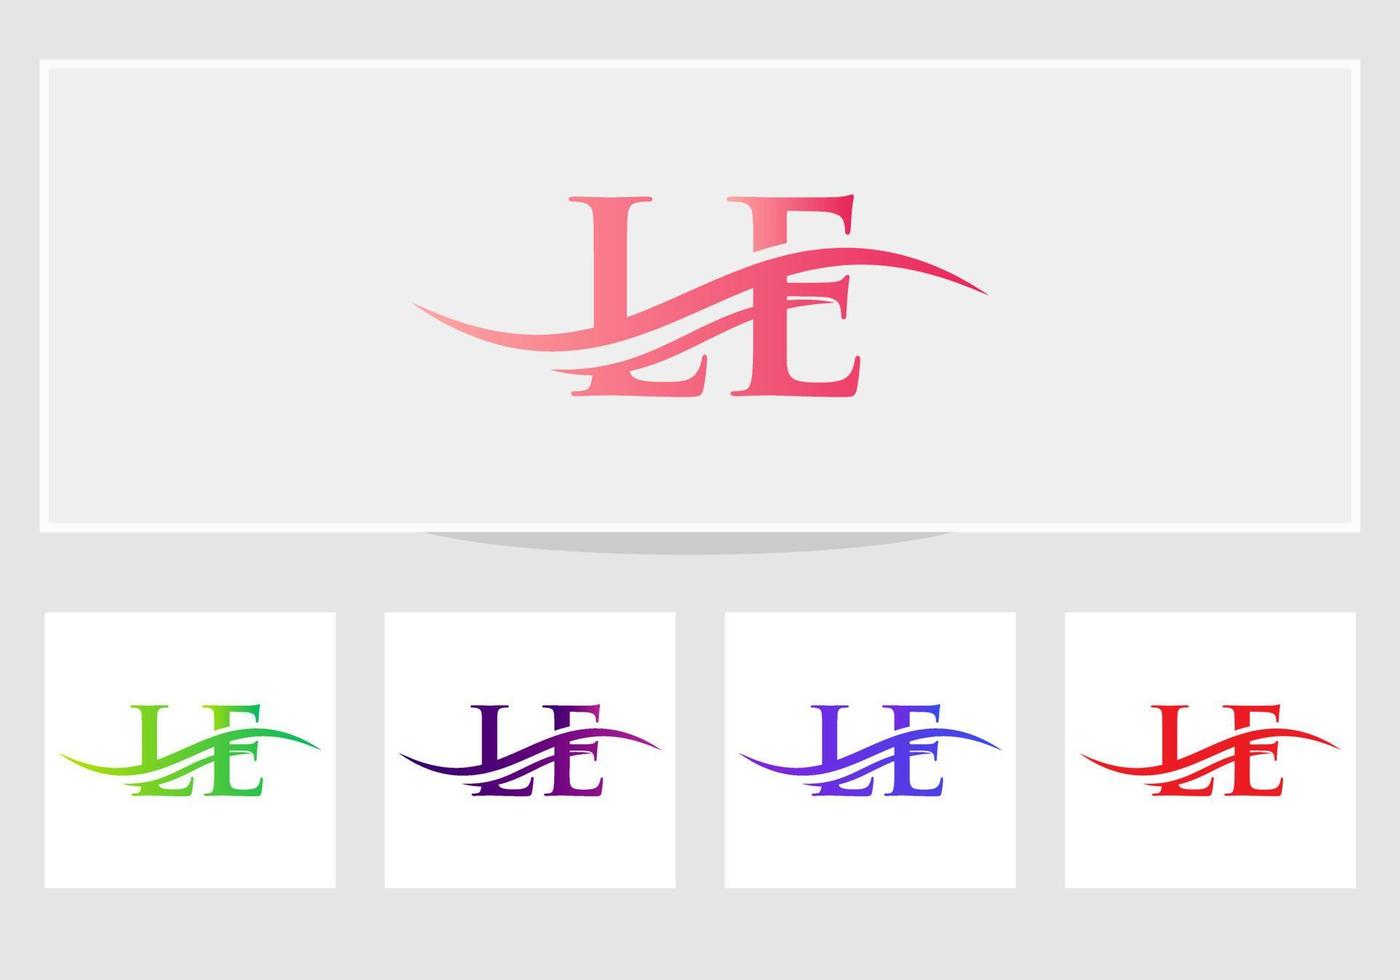 le letter linked logo for business and company identity. modelo de vetor de logotipo le letra inicial